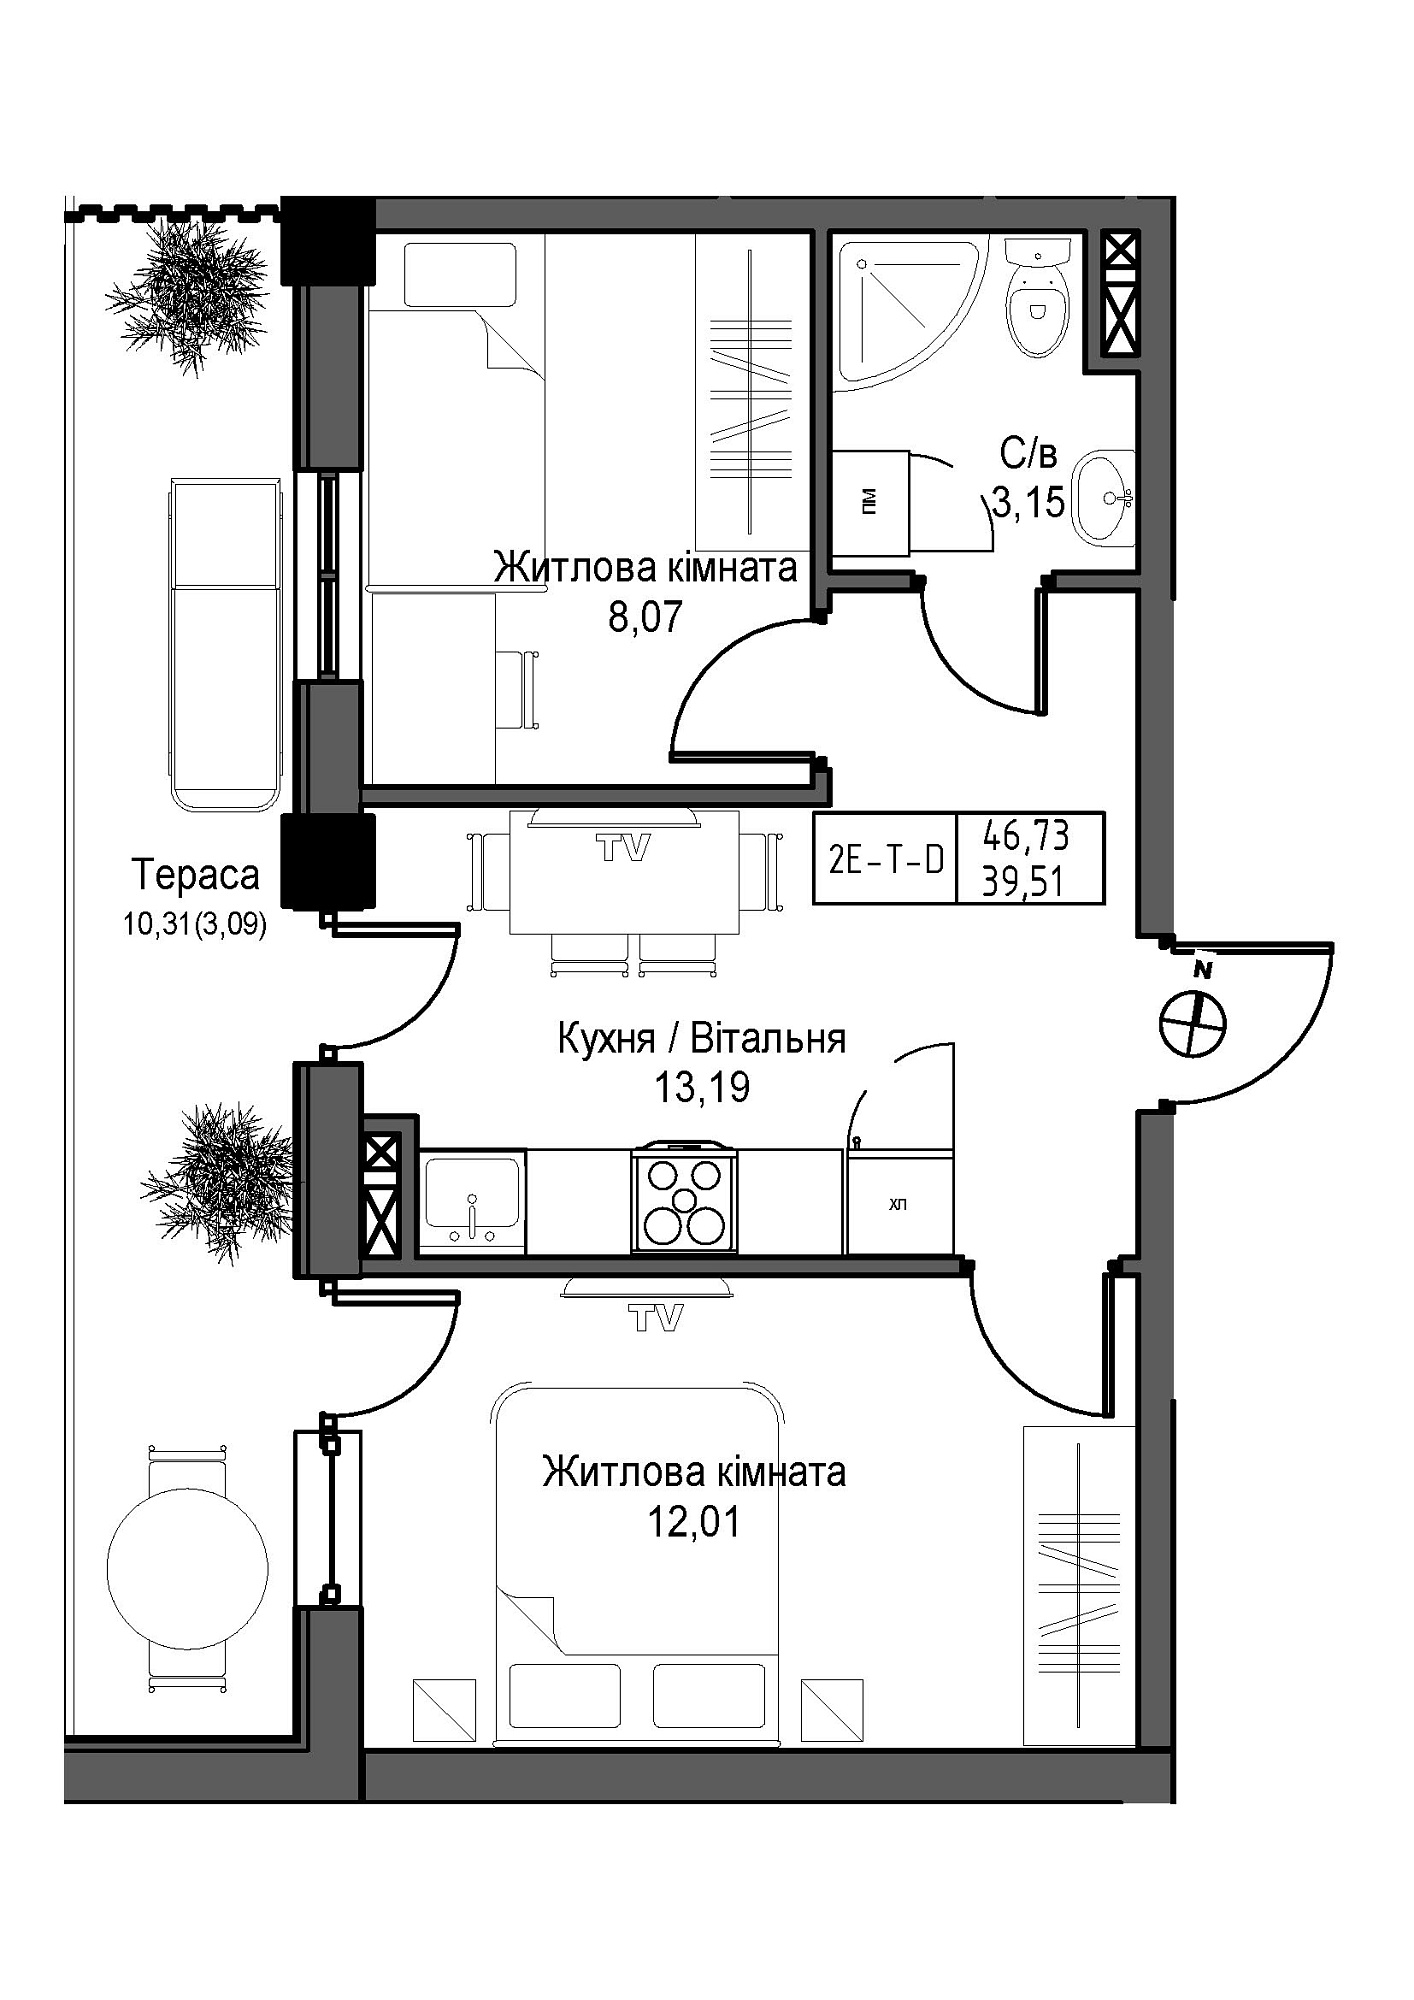 Planning 2-rm flats area 39.51m2, UM-007-05/0001.